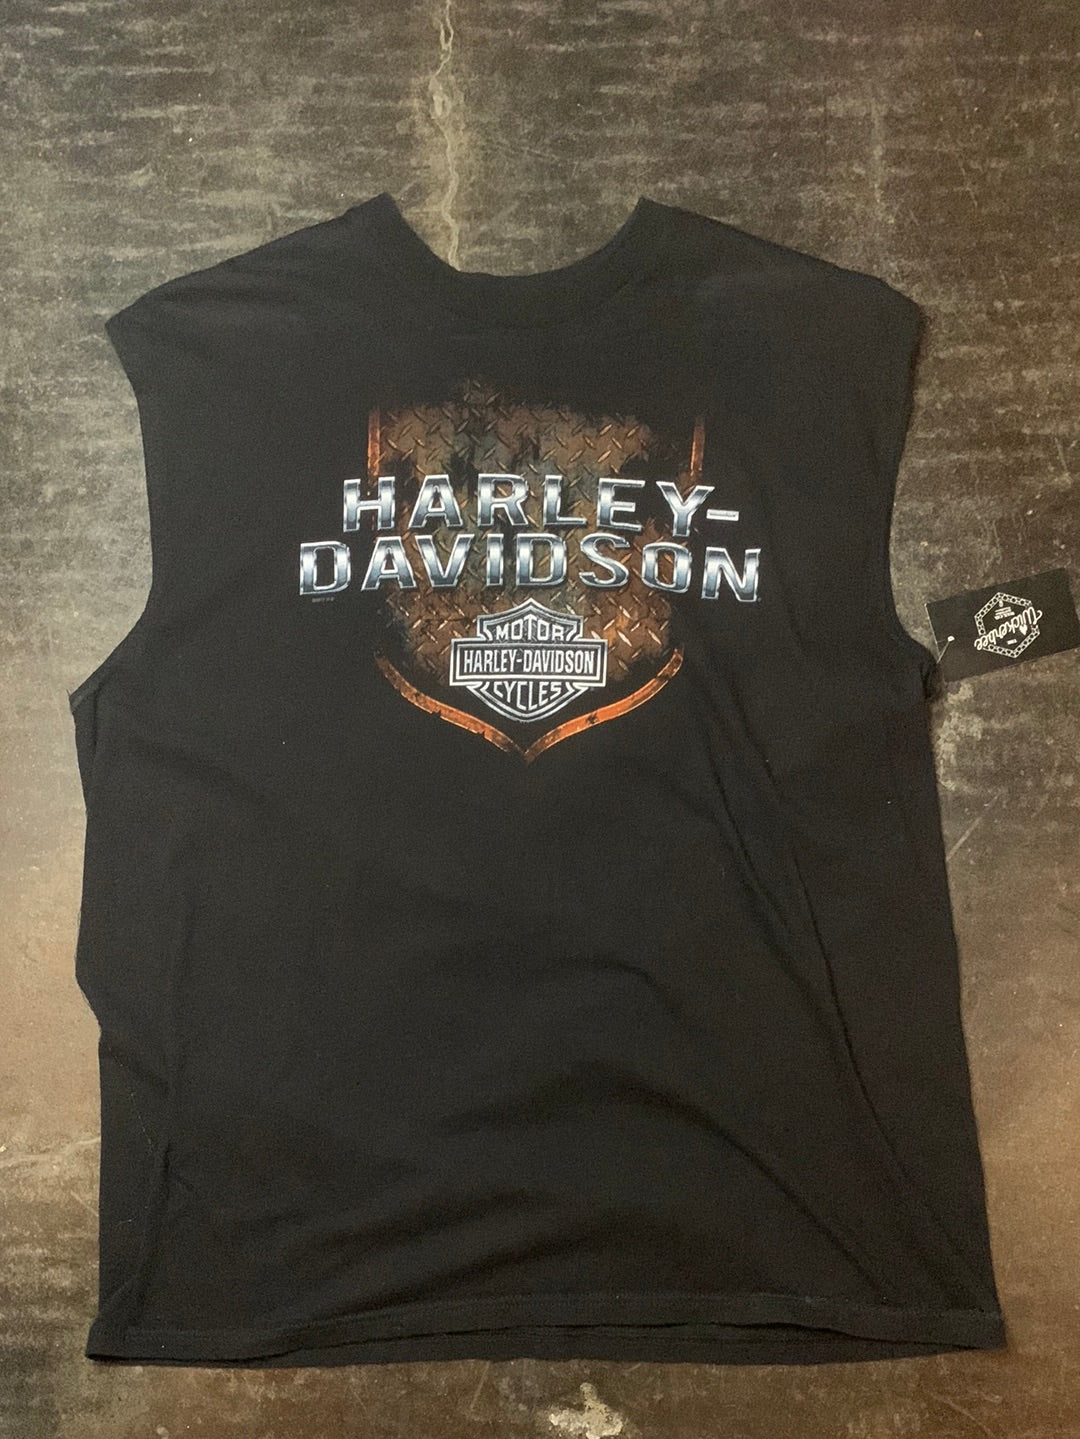 Harley Davidson “Eldridge’s”